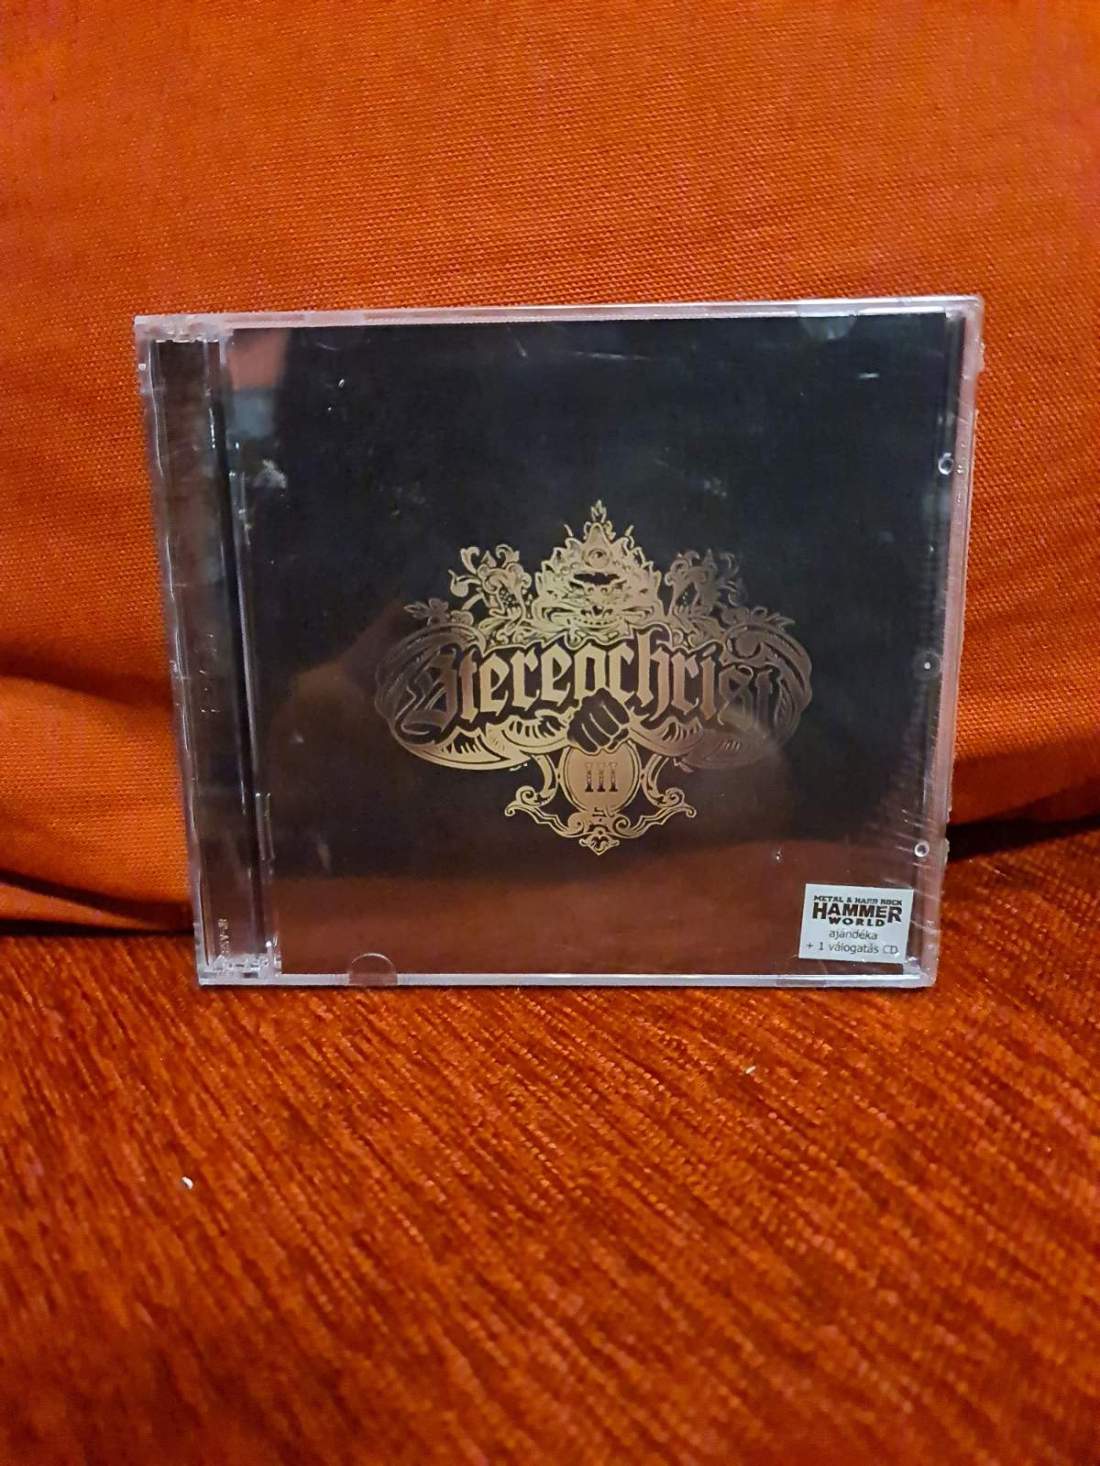 STEREOCHRIST III. CD